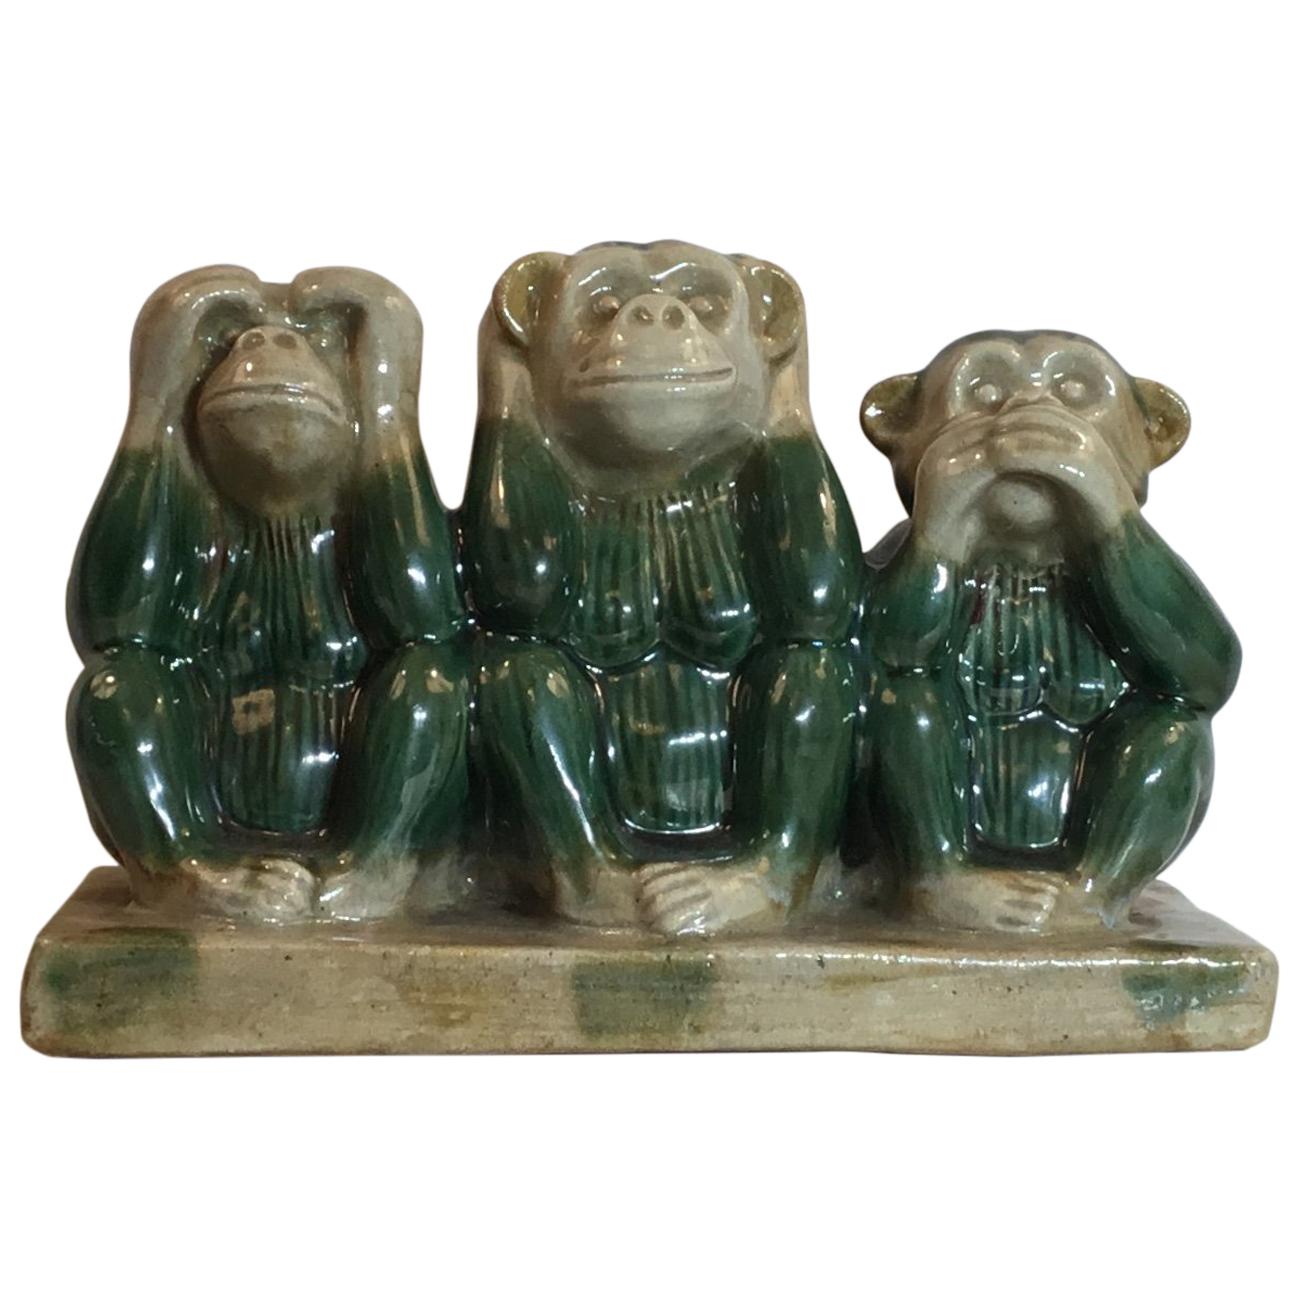 Vintage Ceramic of the Three Monkey